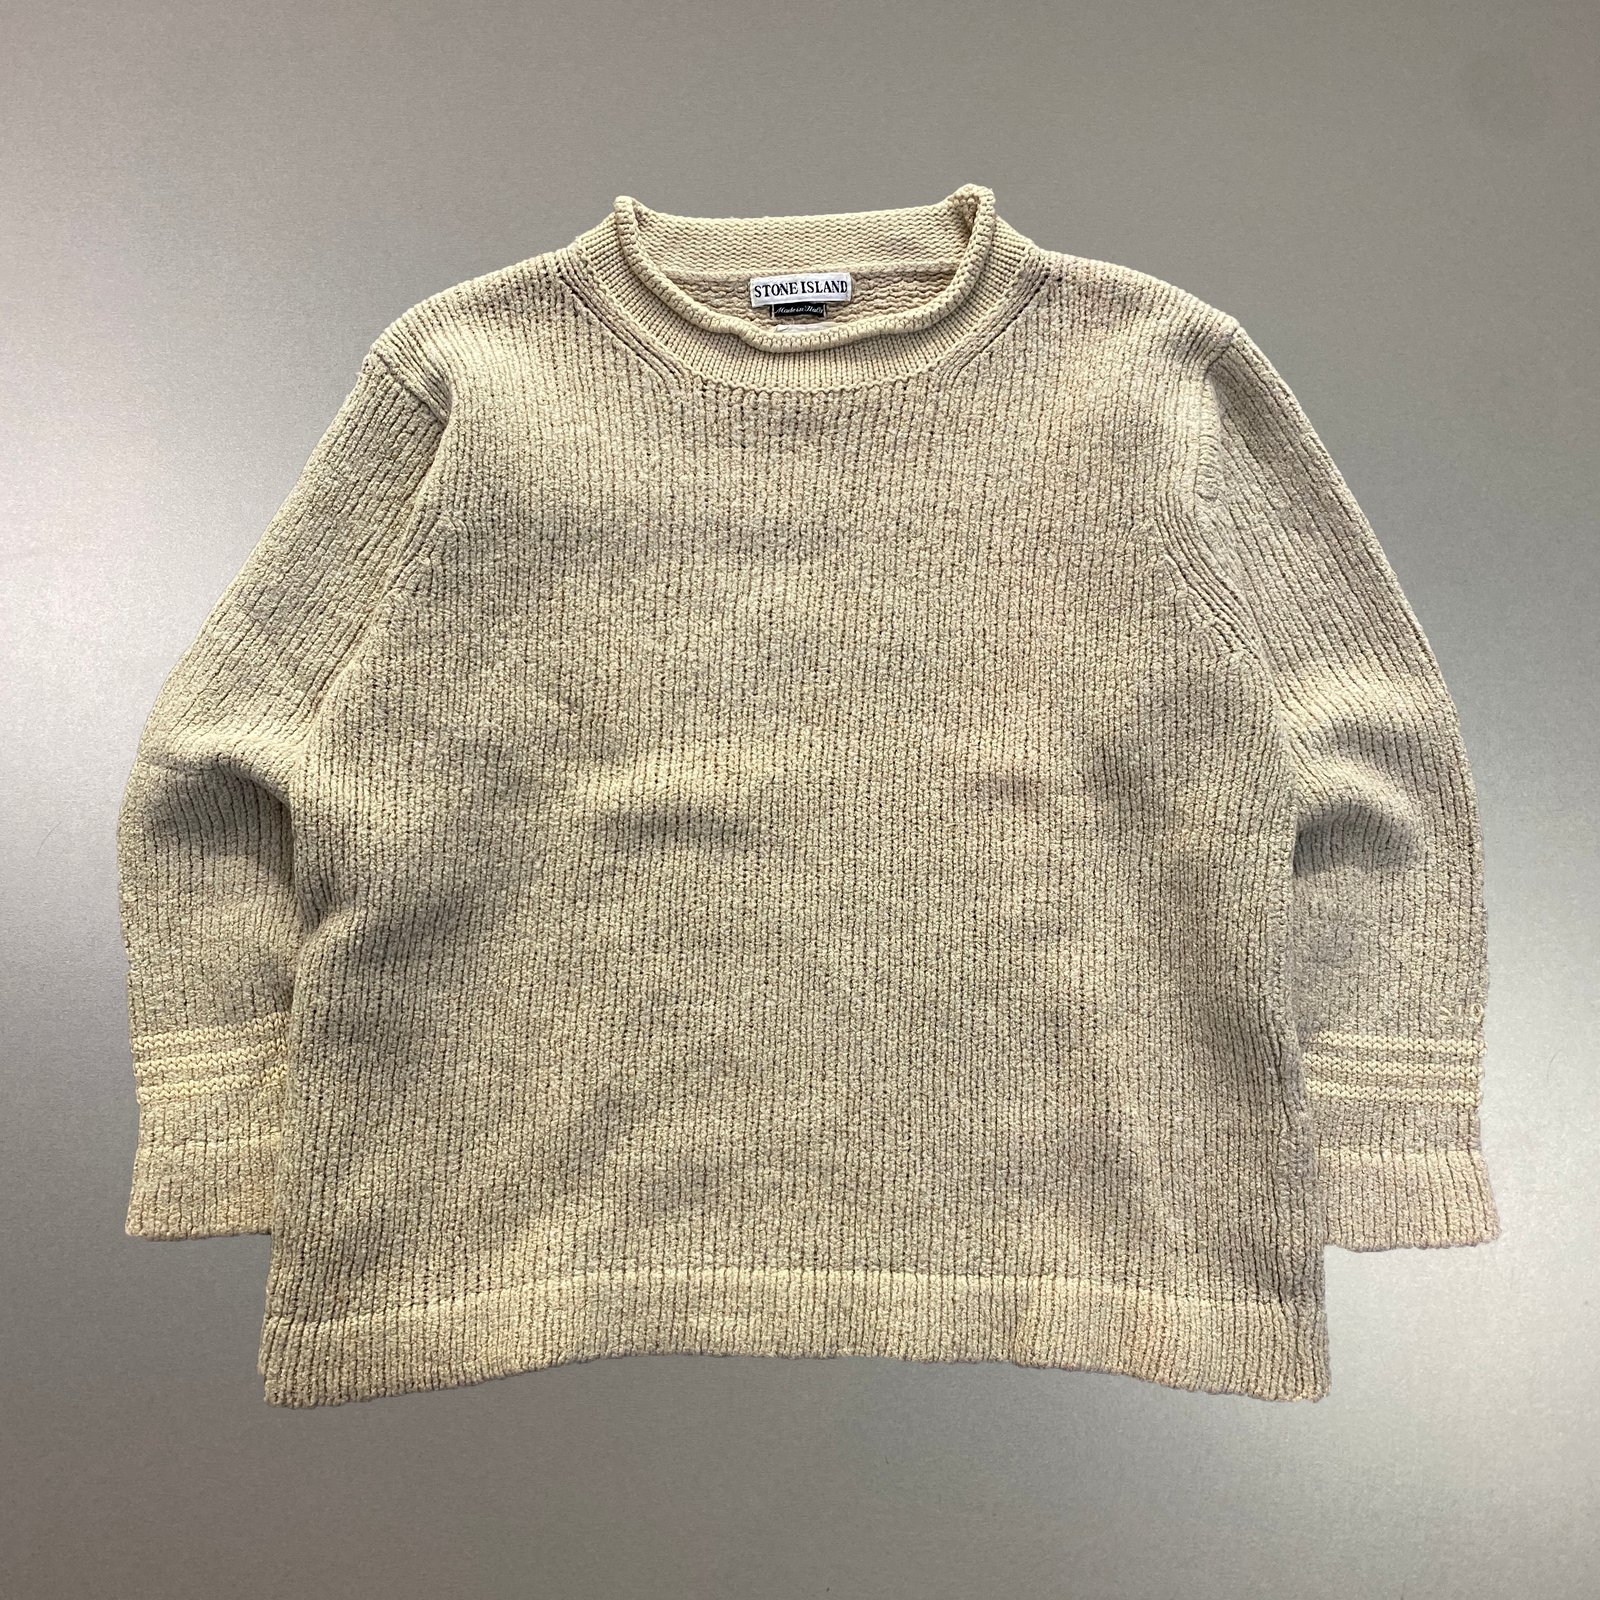 AW 1998 Stone Island heavyweight knitted sweatshirt, size medium